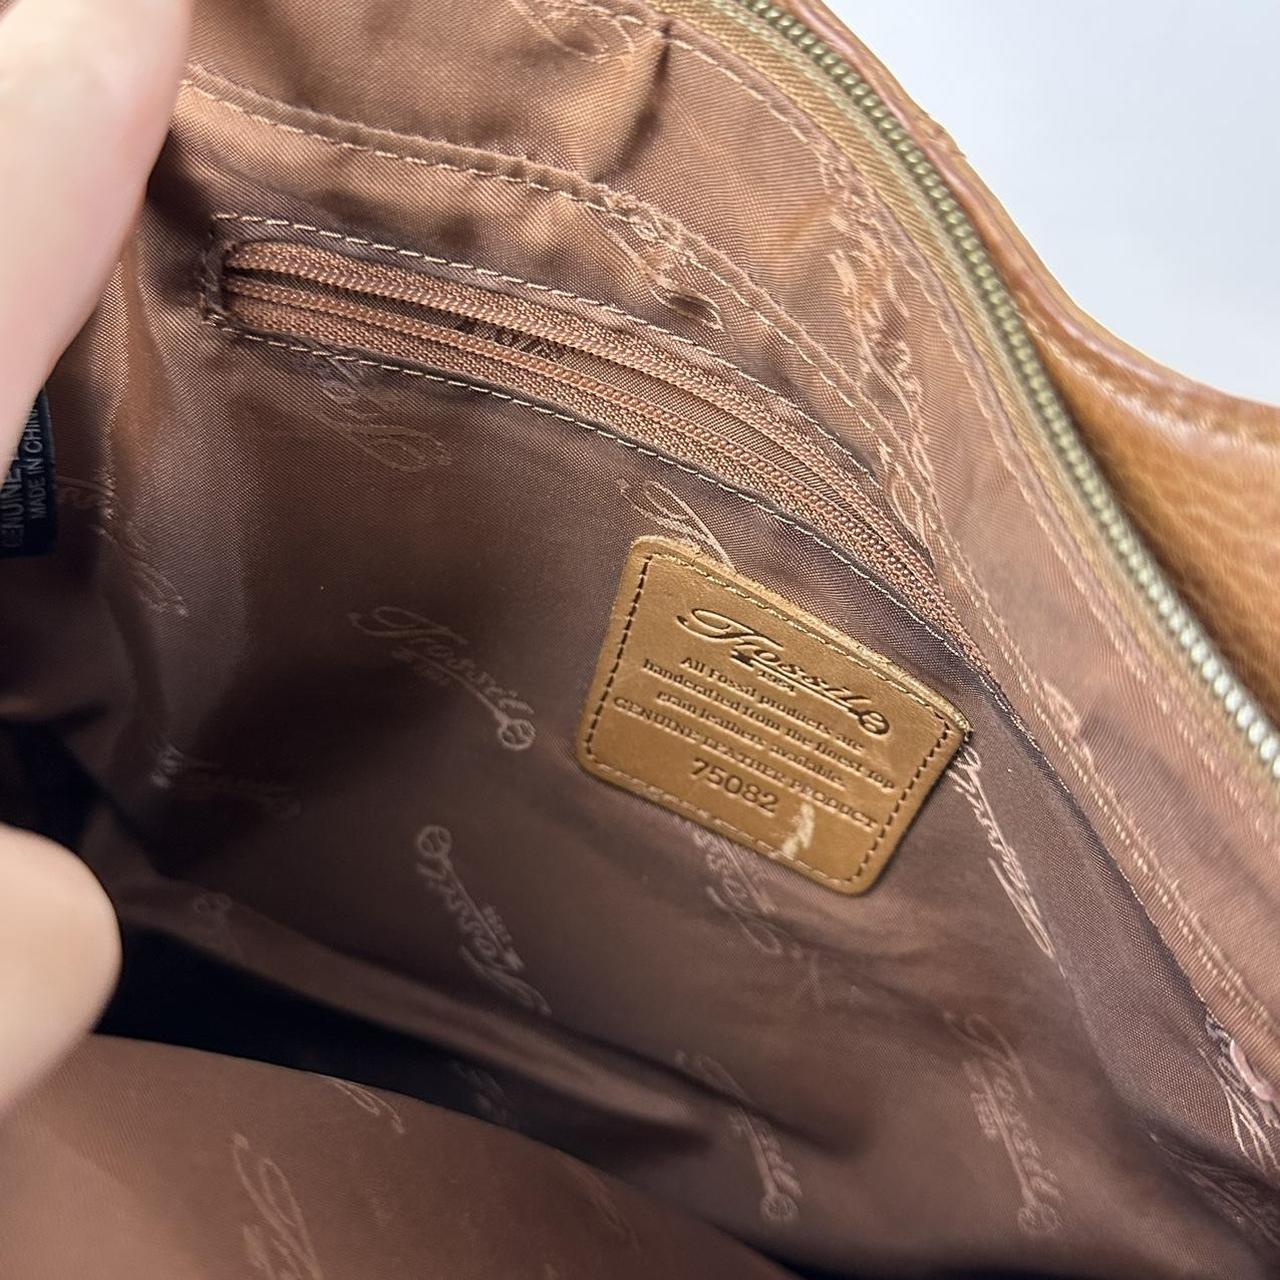 VINTAGE FOSSIL GENUINE Leather Handcrafted Women's Handbag Purse 75082 -  Beige $17.95 - PicClick